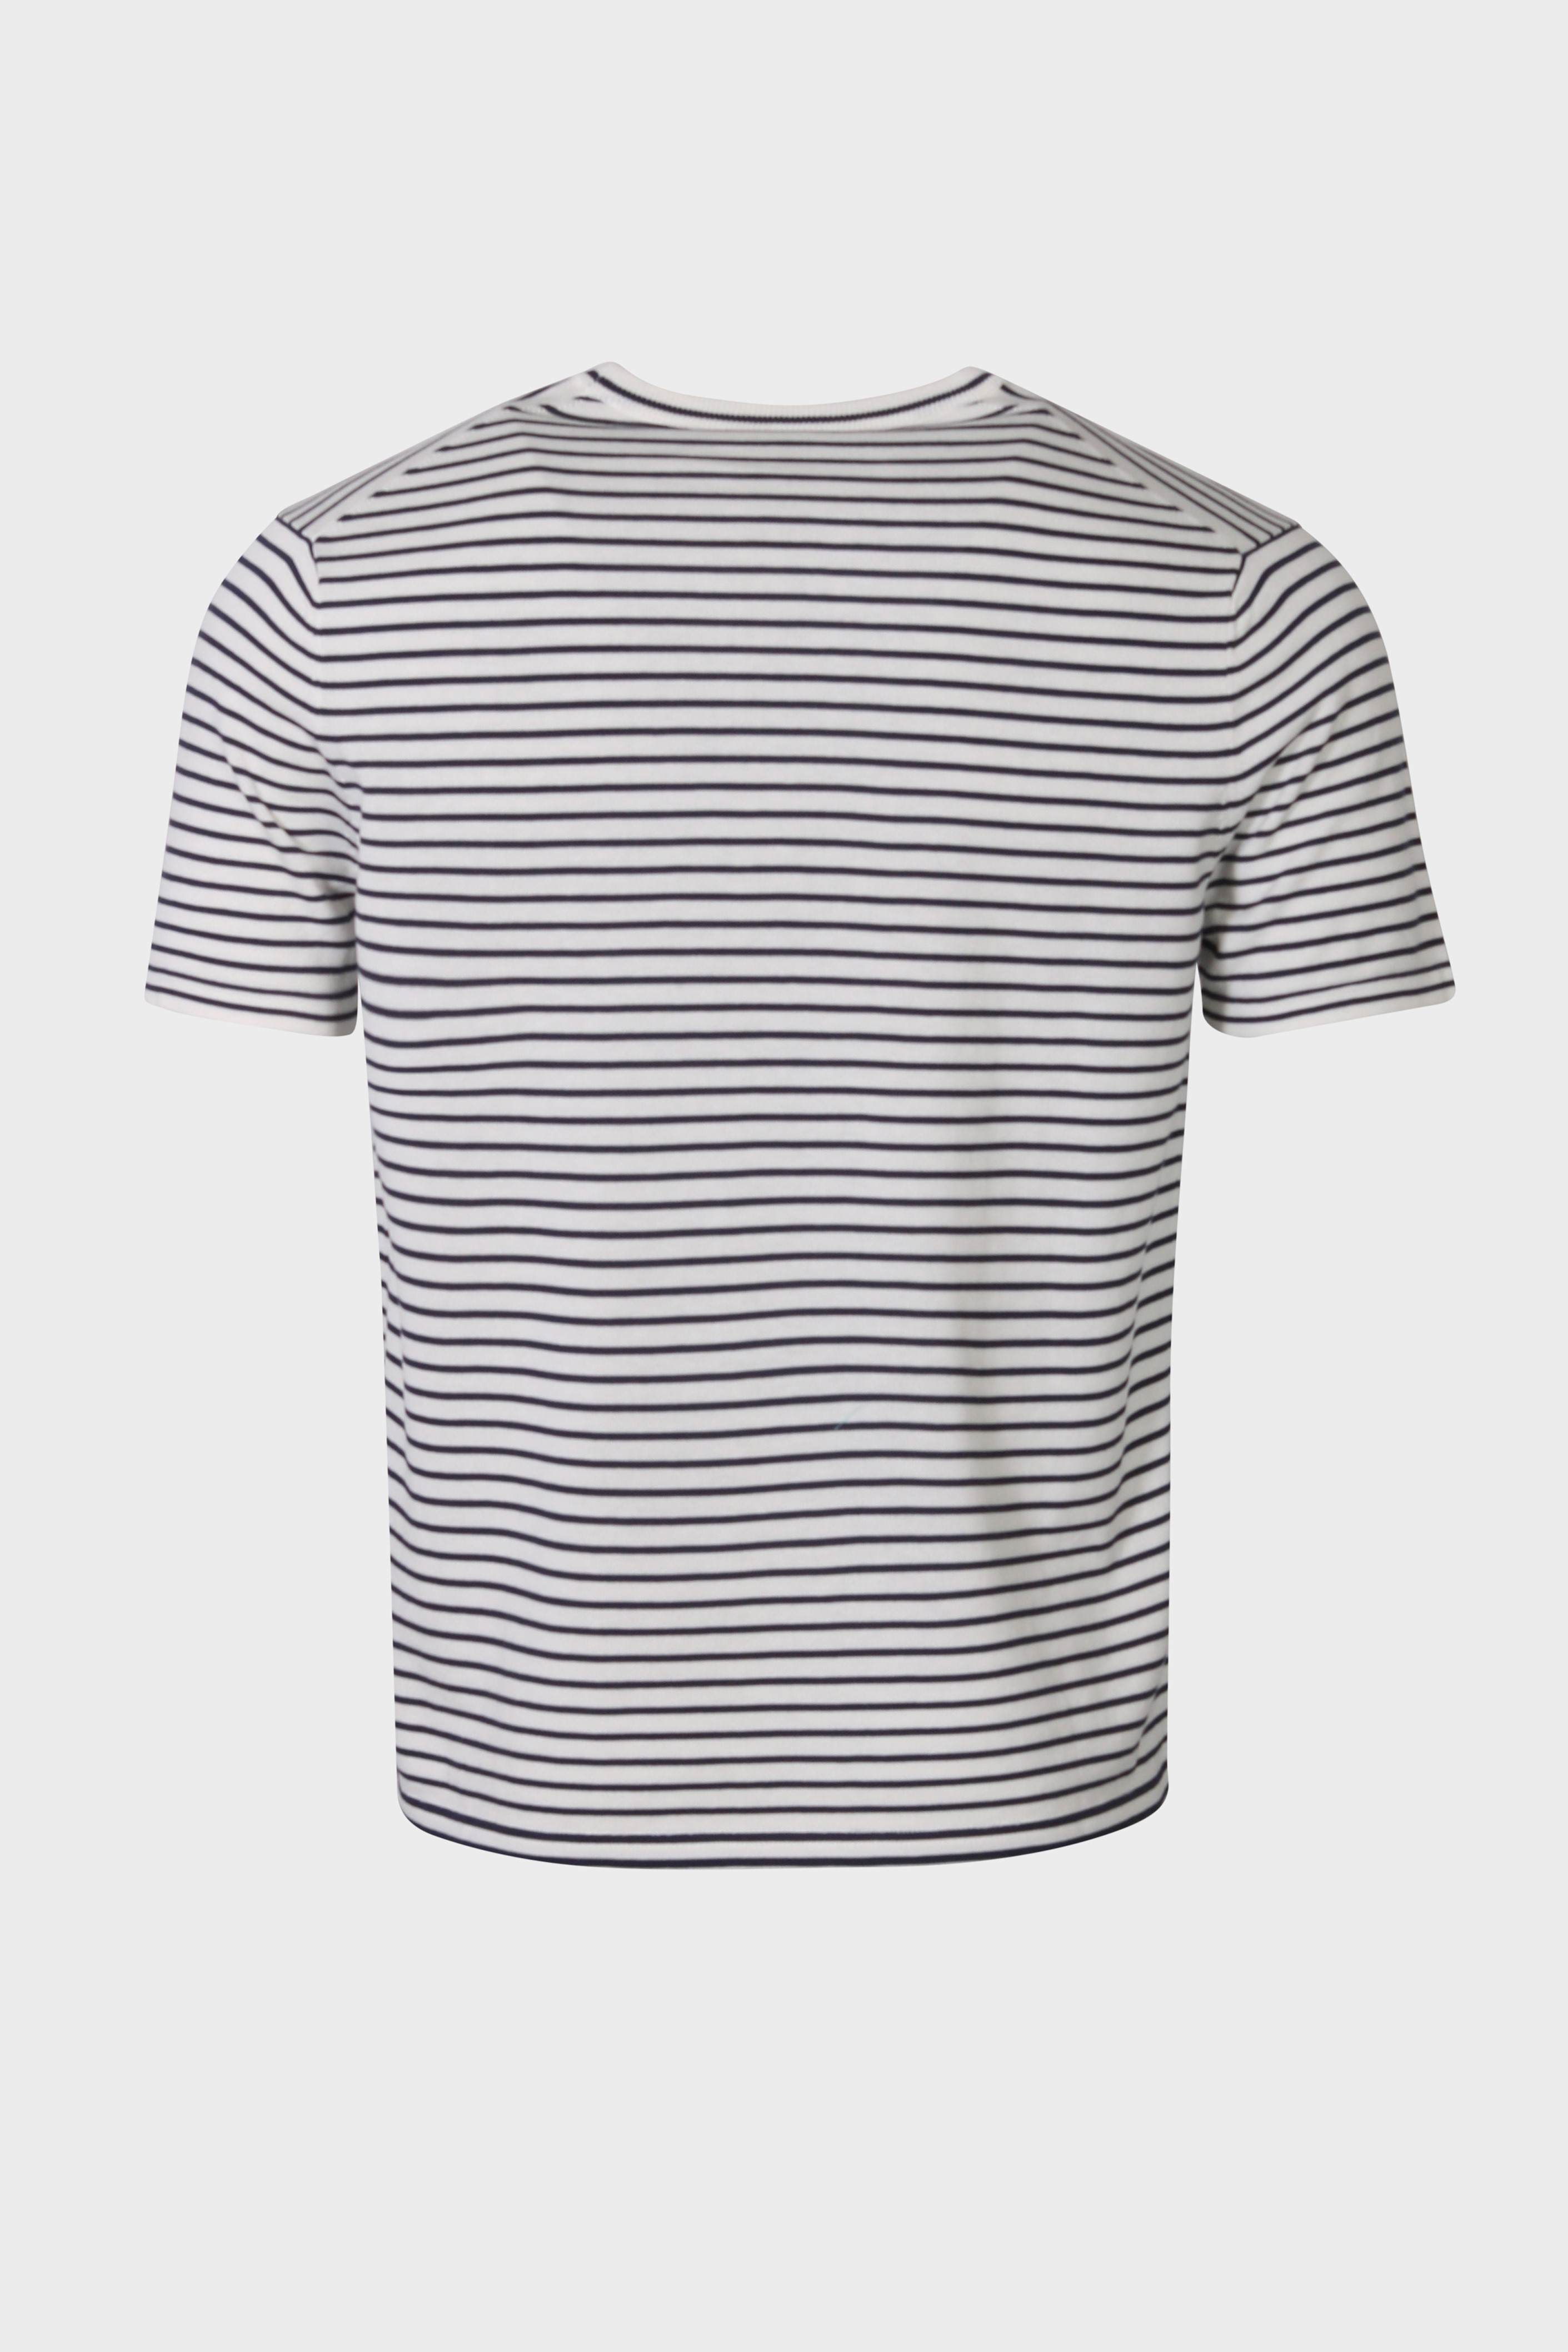 ASPESI Striped Knit T-Shirt in Navy/White 50